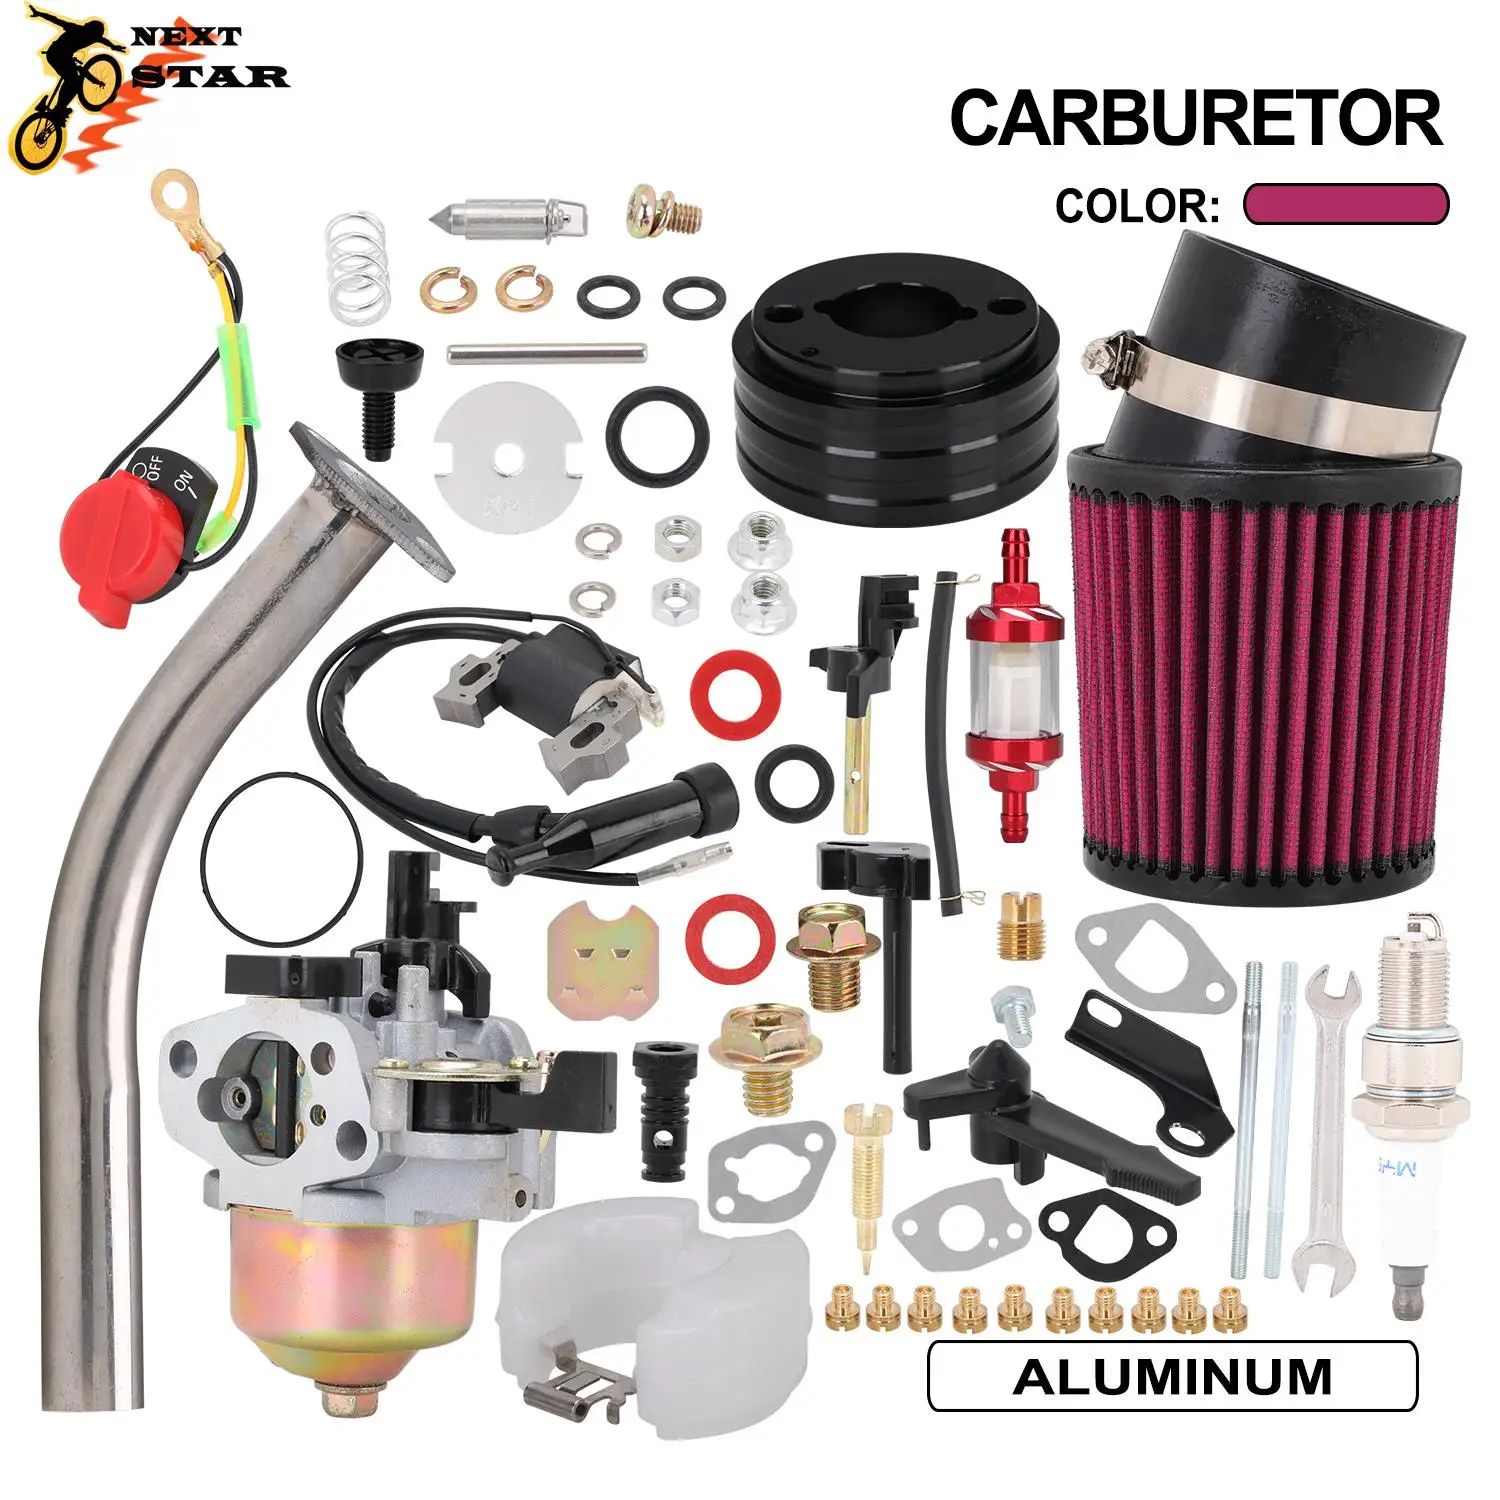 

Carburetor Carb Air Filter Adapter Exhaust Pipe Fuel Pipe Gasket Kit For Honda GX160 GX200 6.5 Hp Go Kart Kit Mini Bike Engine